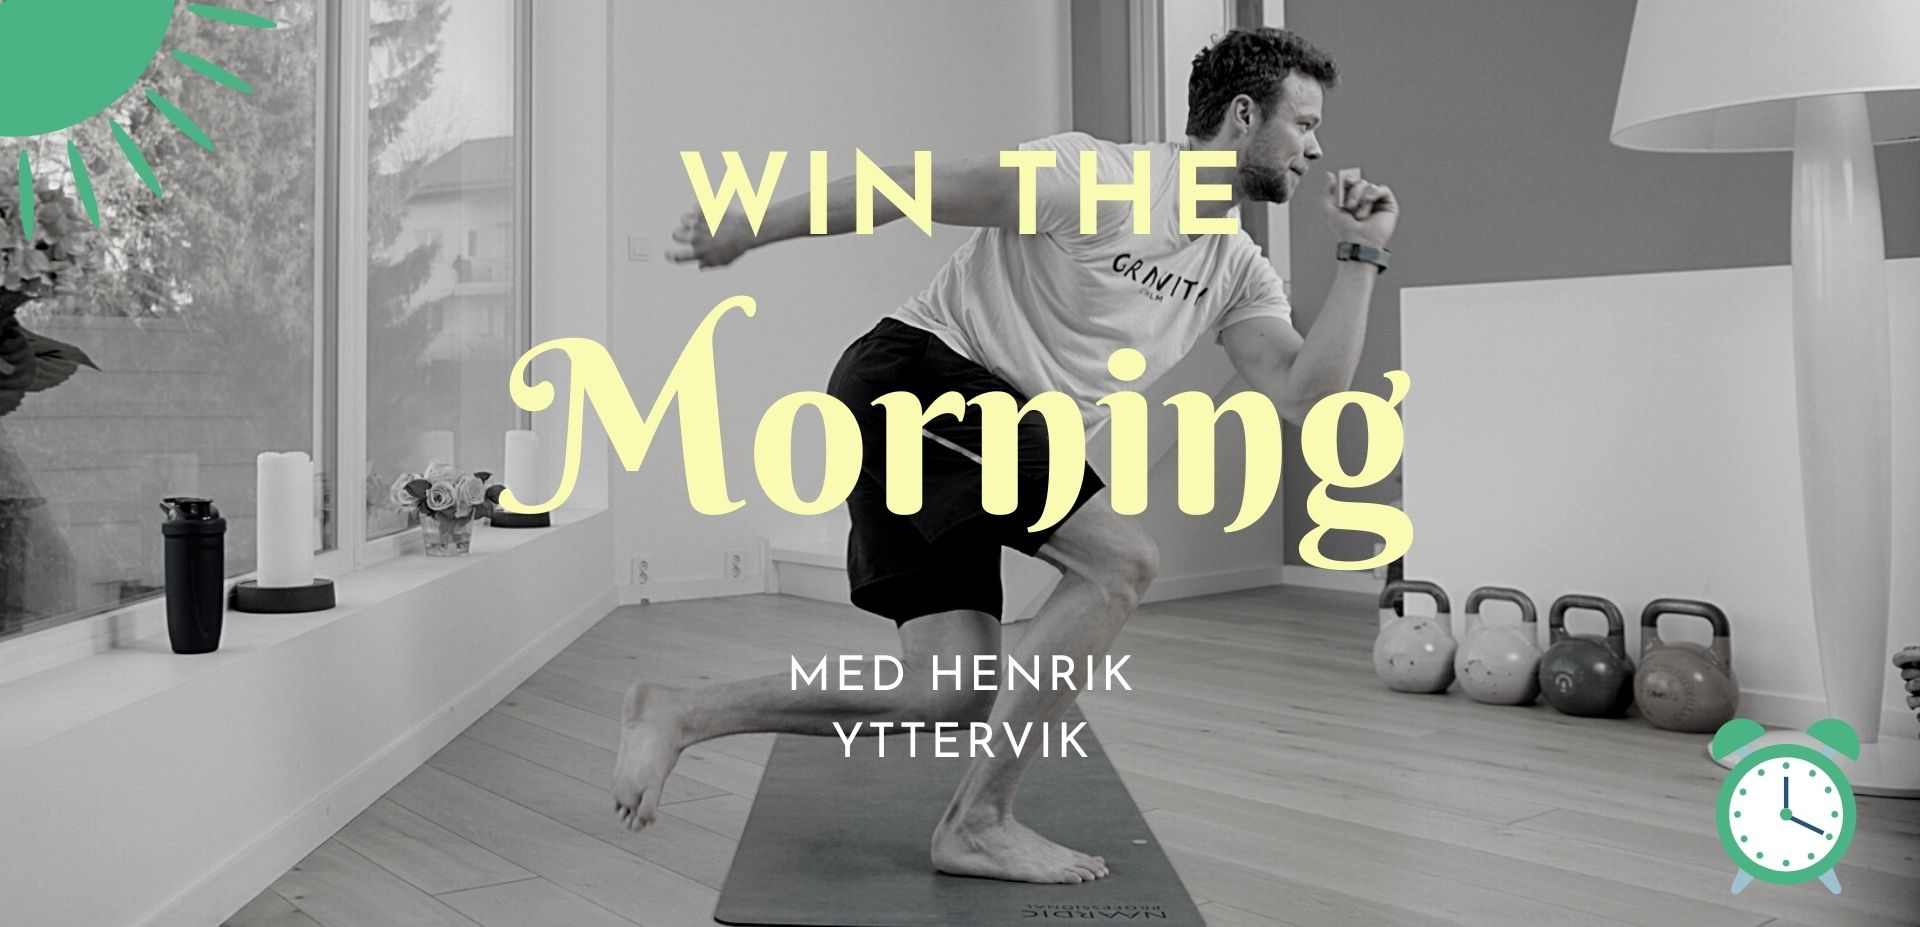 Henrik - Win the morning